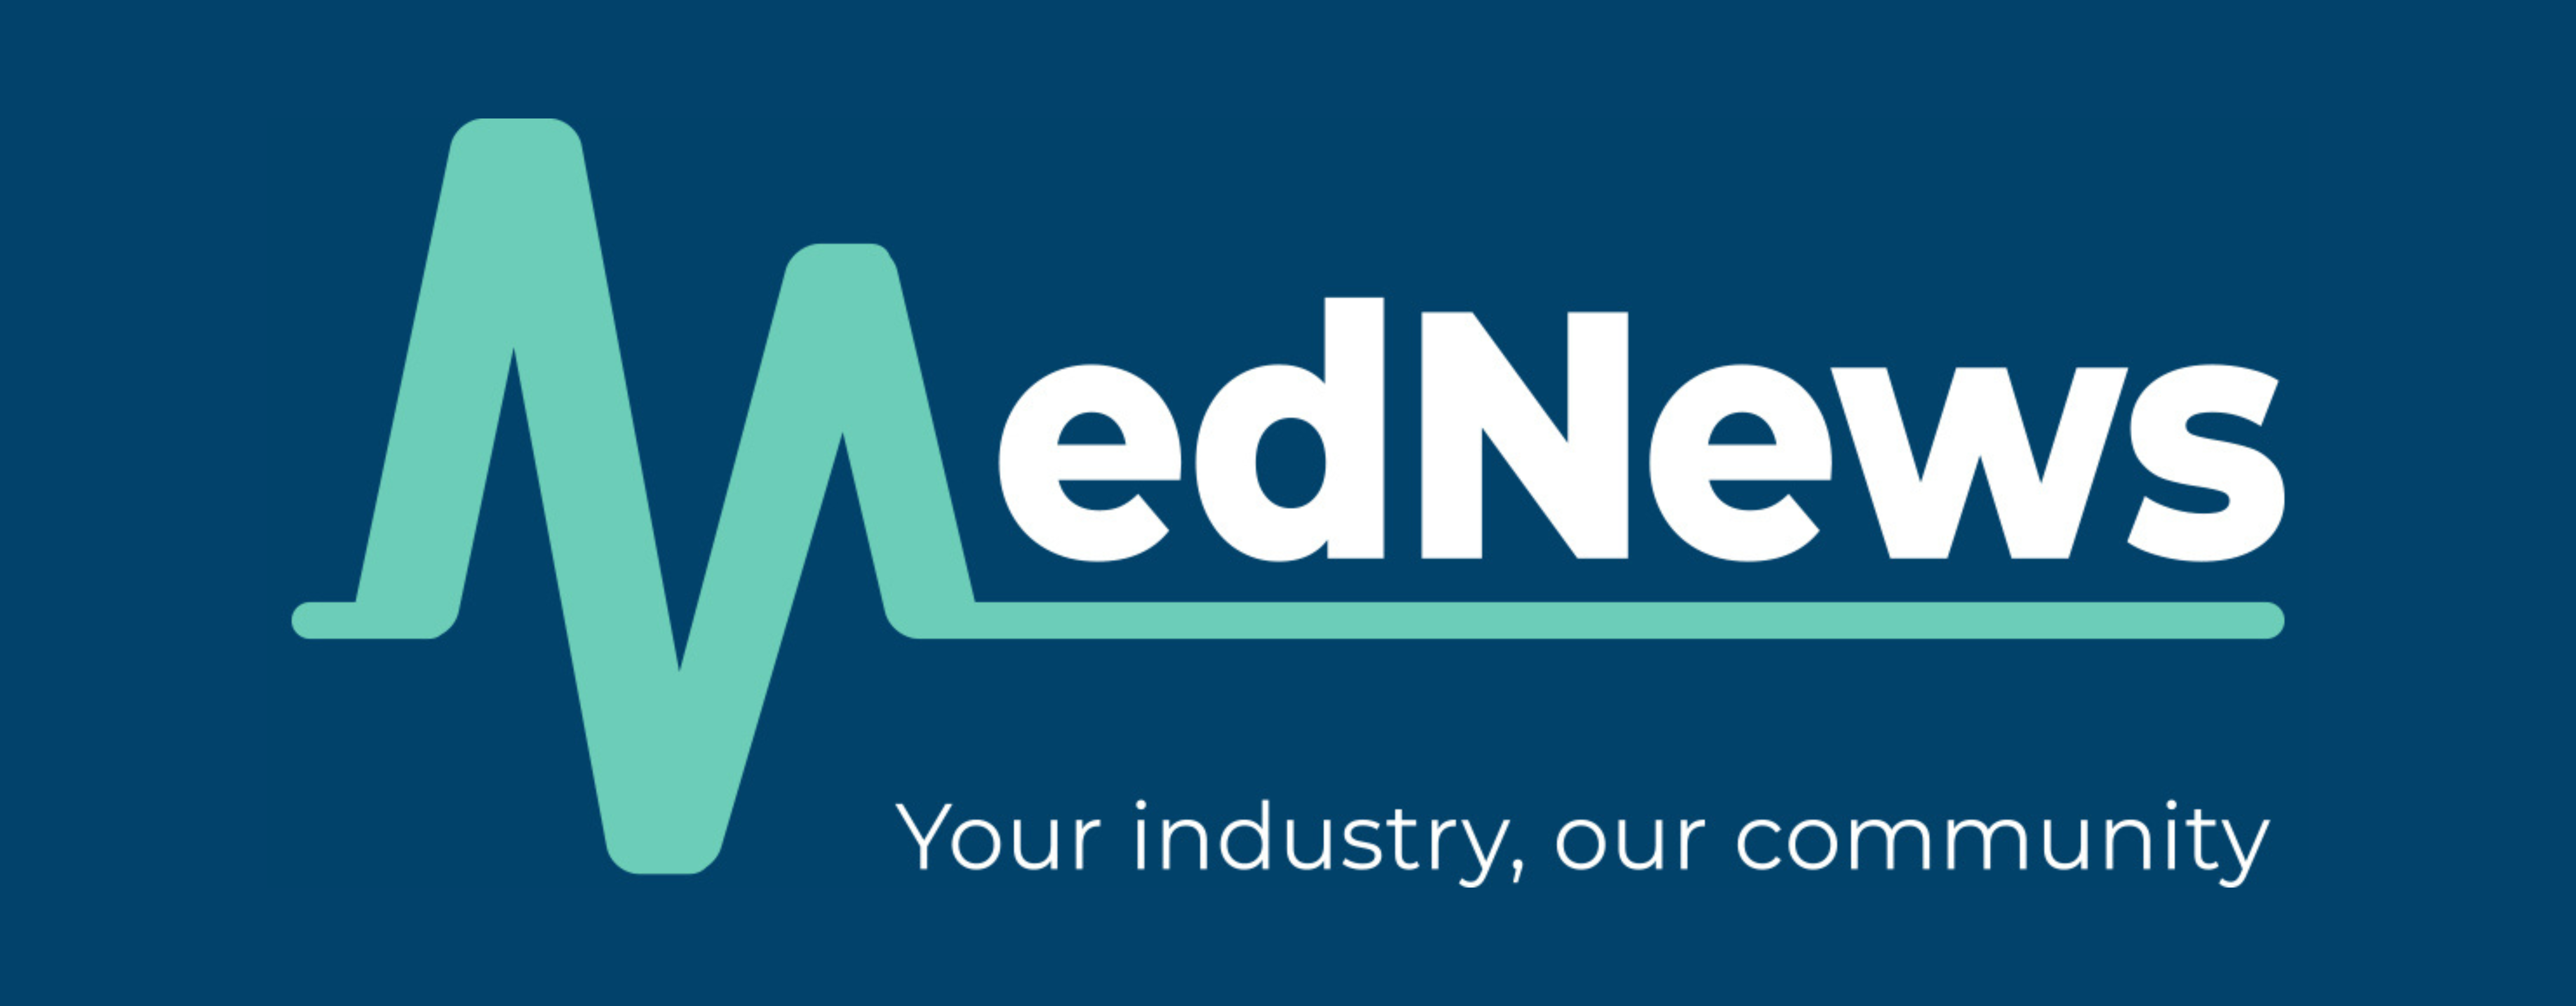 MedNews logo and tagline